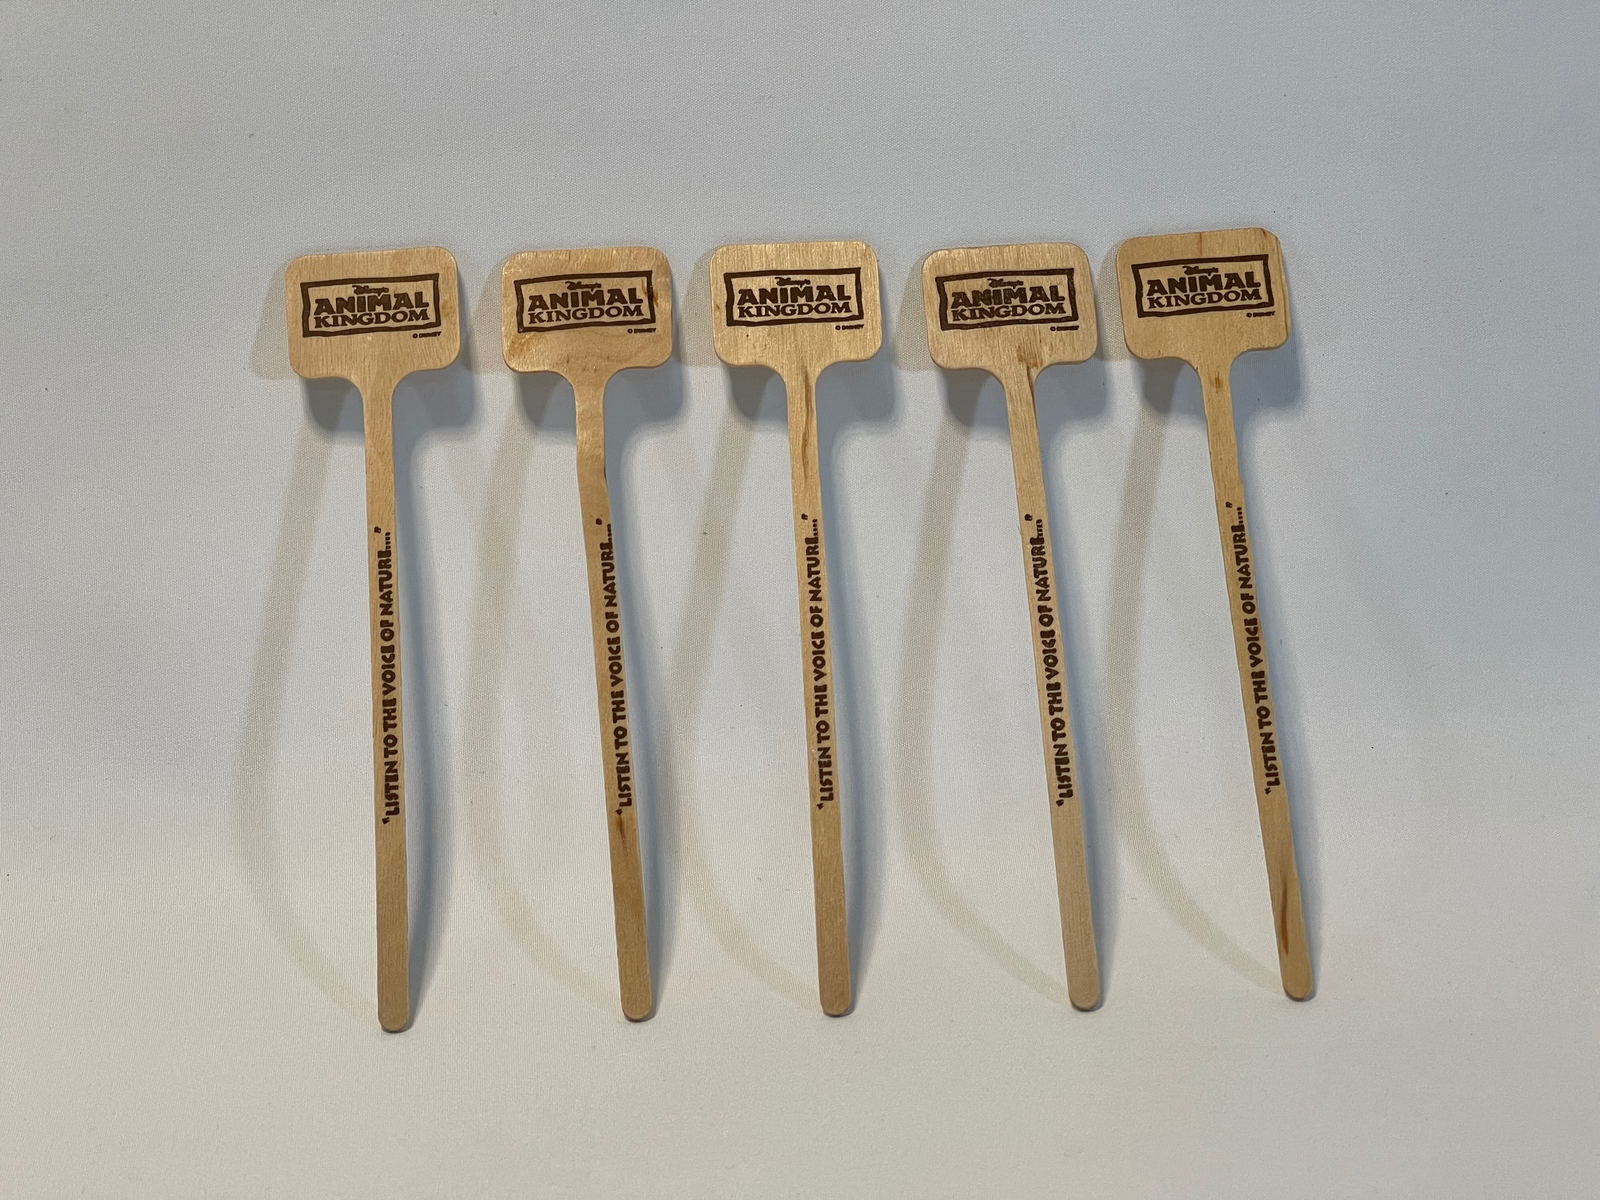 Primary image for Disney's Animal Kingdom Wooden Stir Sticks (Set of 5)